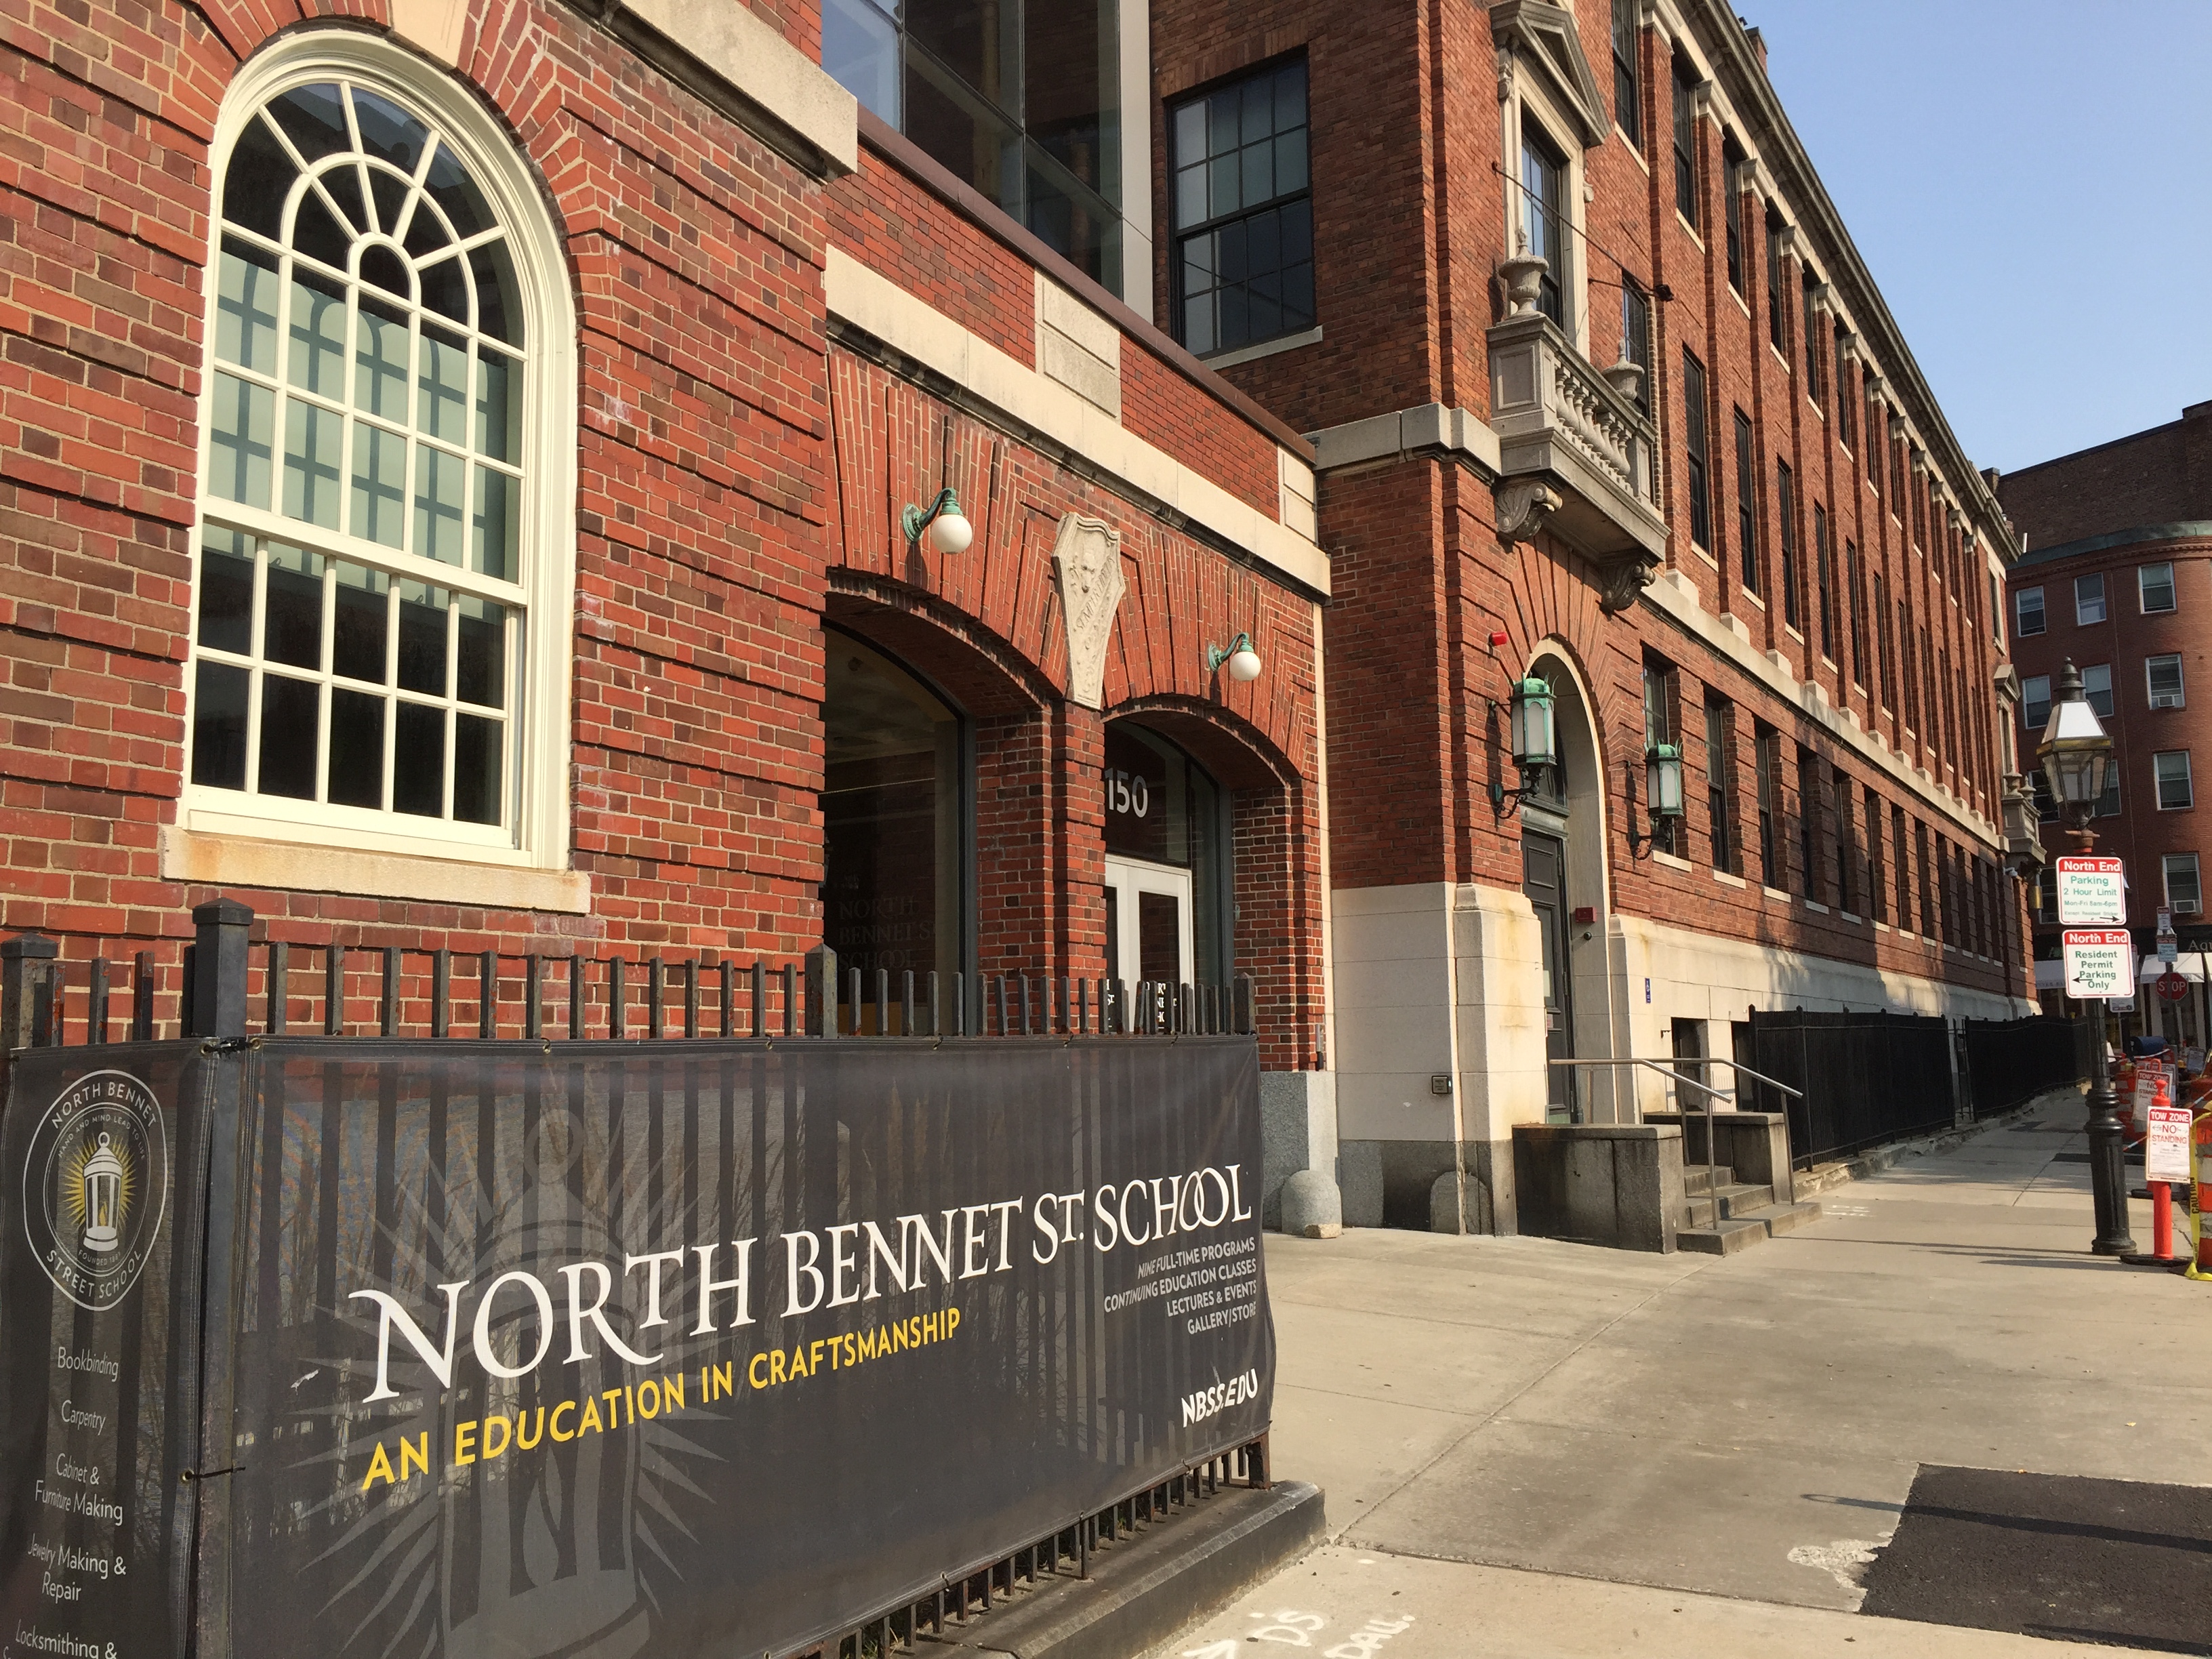 North Bennett Street School